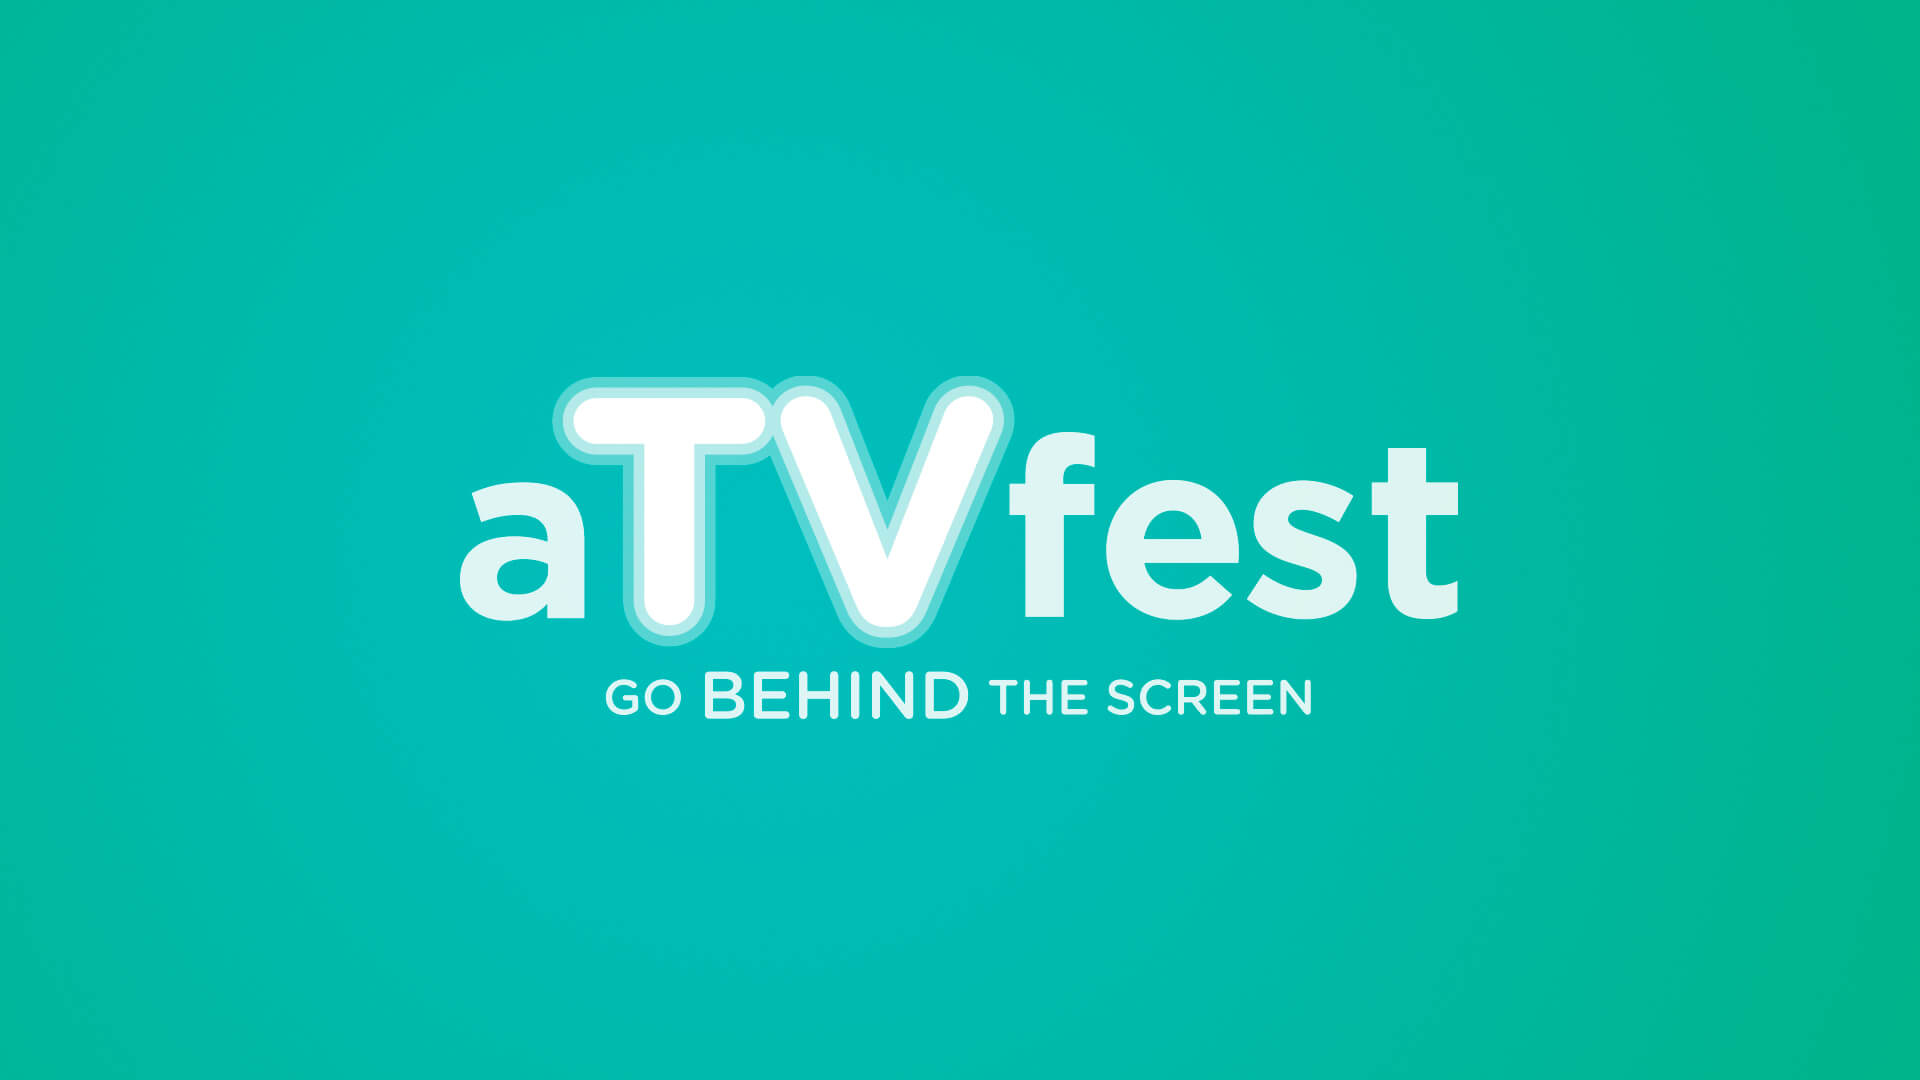 aTVfest-logo-tagline_green